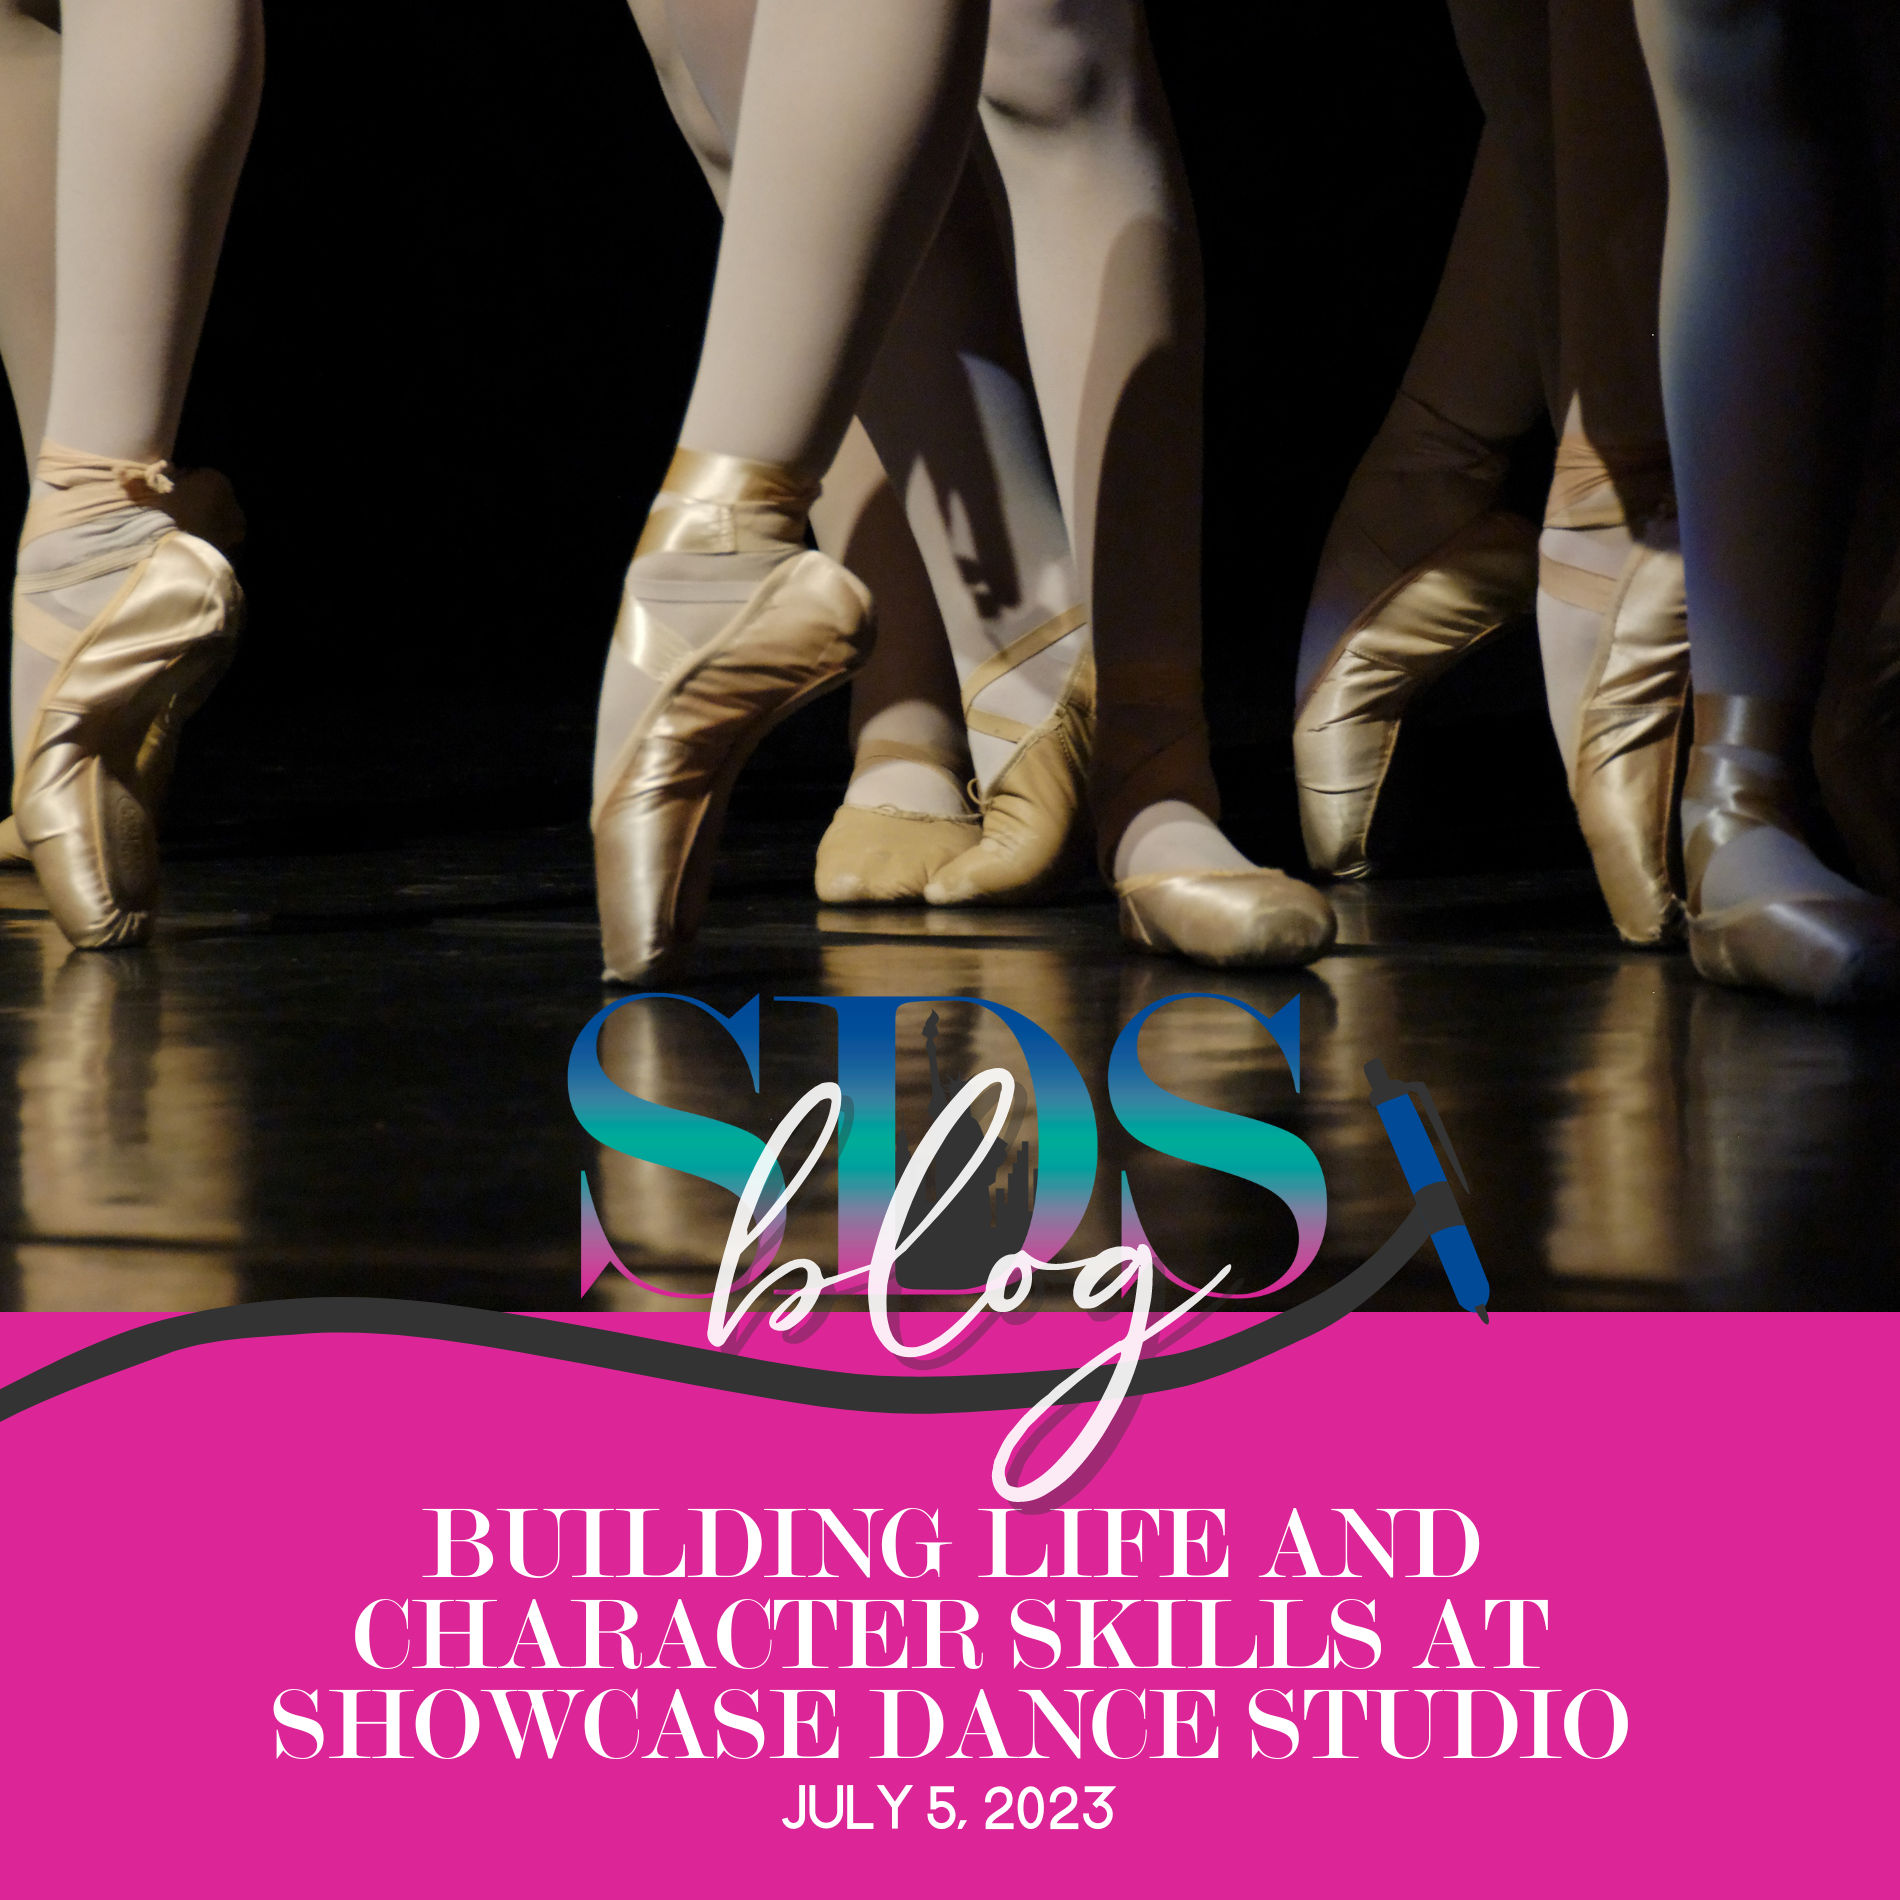 Building Life and Character Skills at Showcase Dance Studio